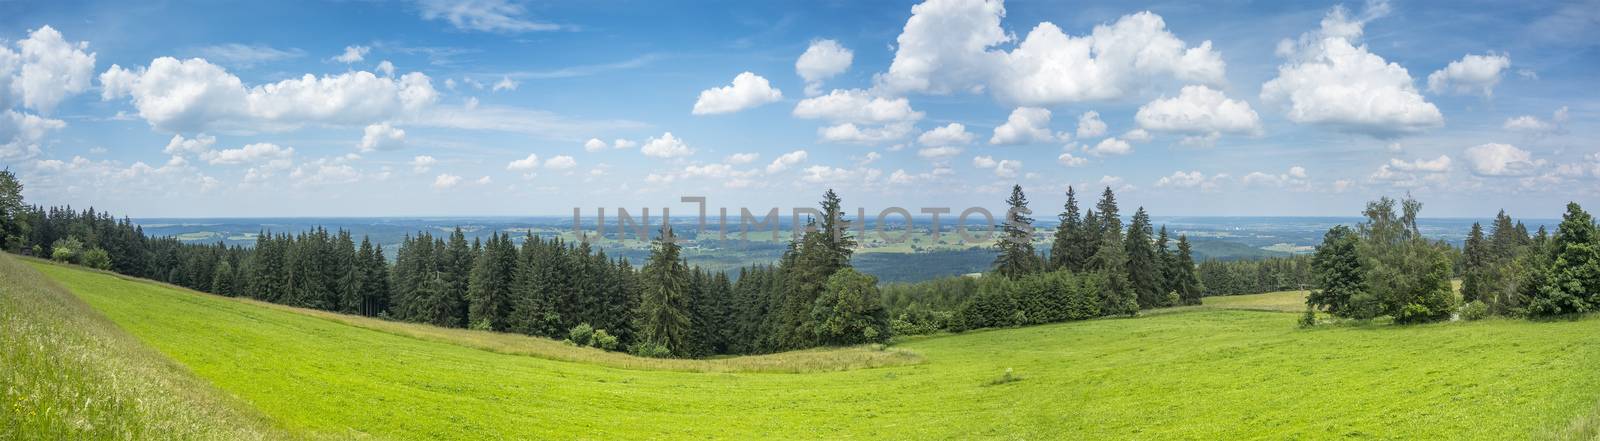 bavaria landscape by magann